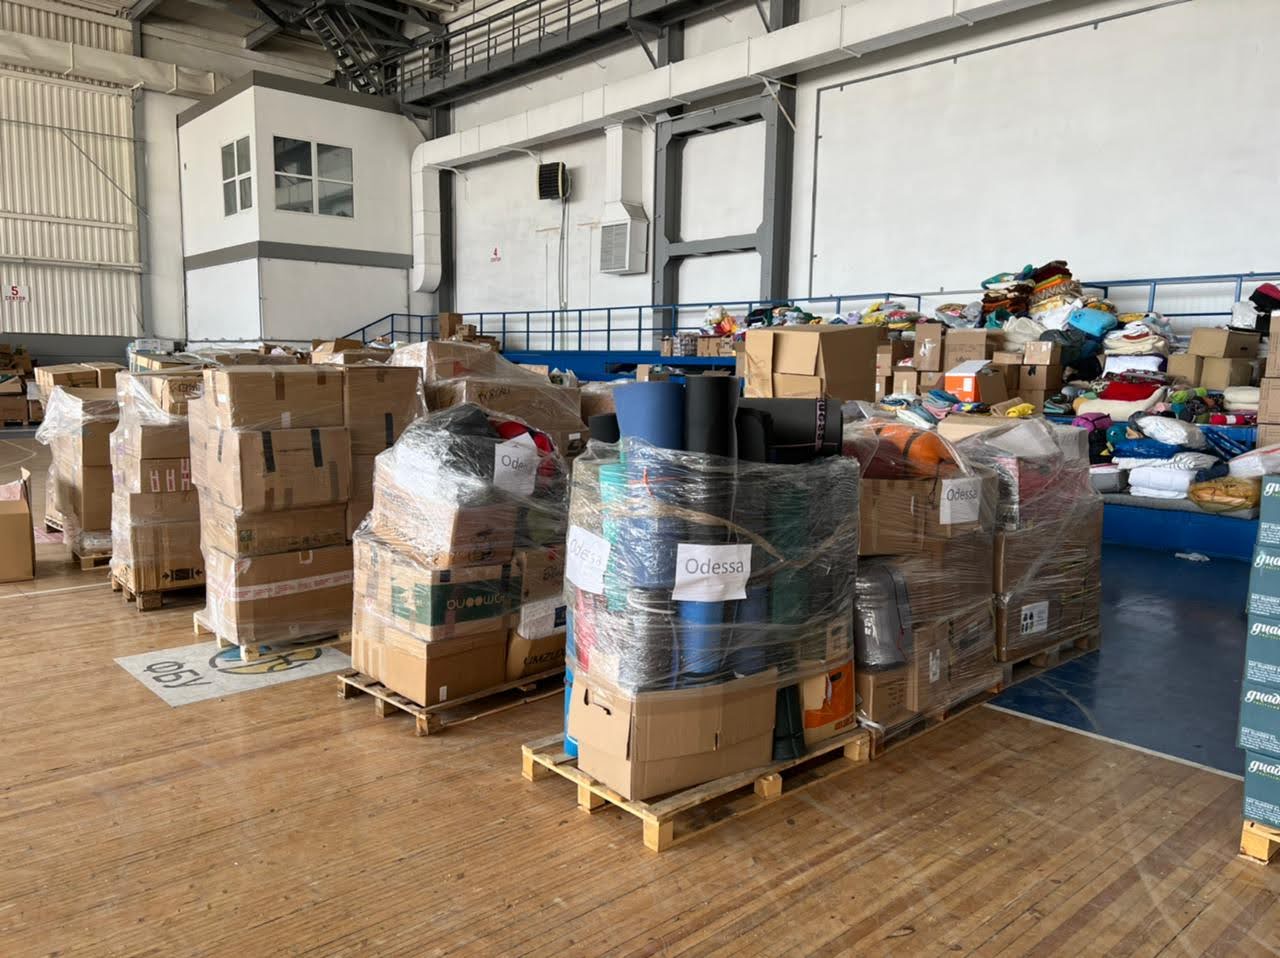 Supply donations Odesa Ukraine. Baltimore's Sister City